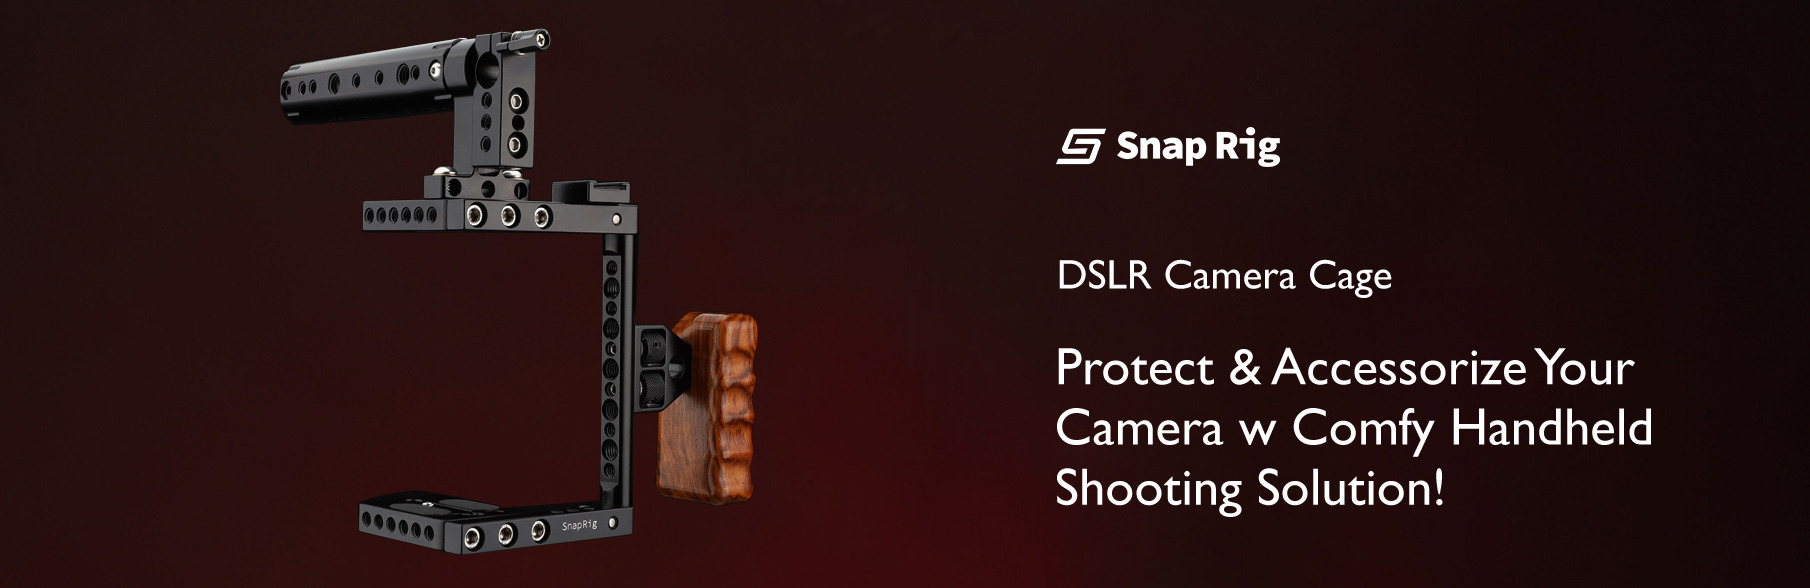 Proaim SnapRig DSLR Camera Cage Rig with Top & Side Handles UC-01Proaim SnapRig DSLR Camera Cage Rig with Top & Side Handles UC-01